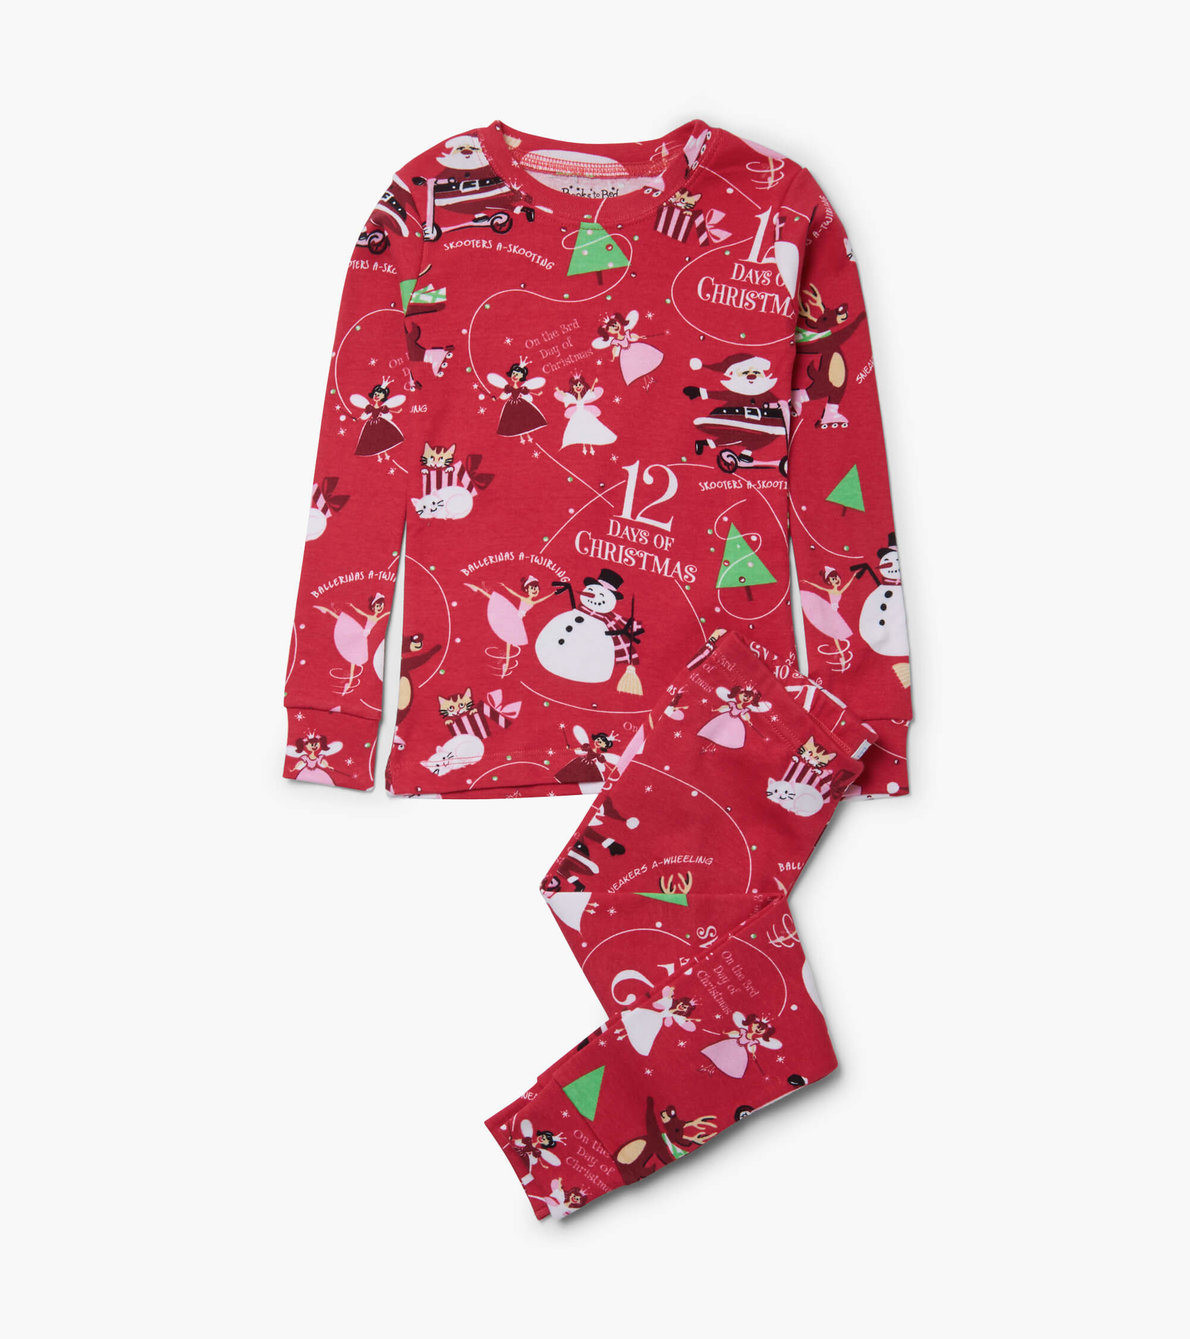 View larger image of 12 Days of Christmas Red Pajama Set 